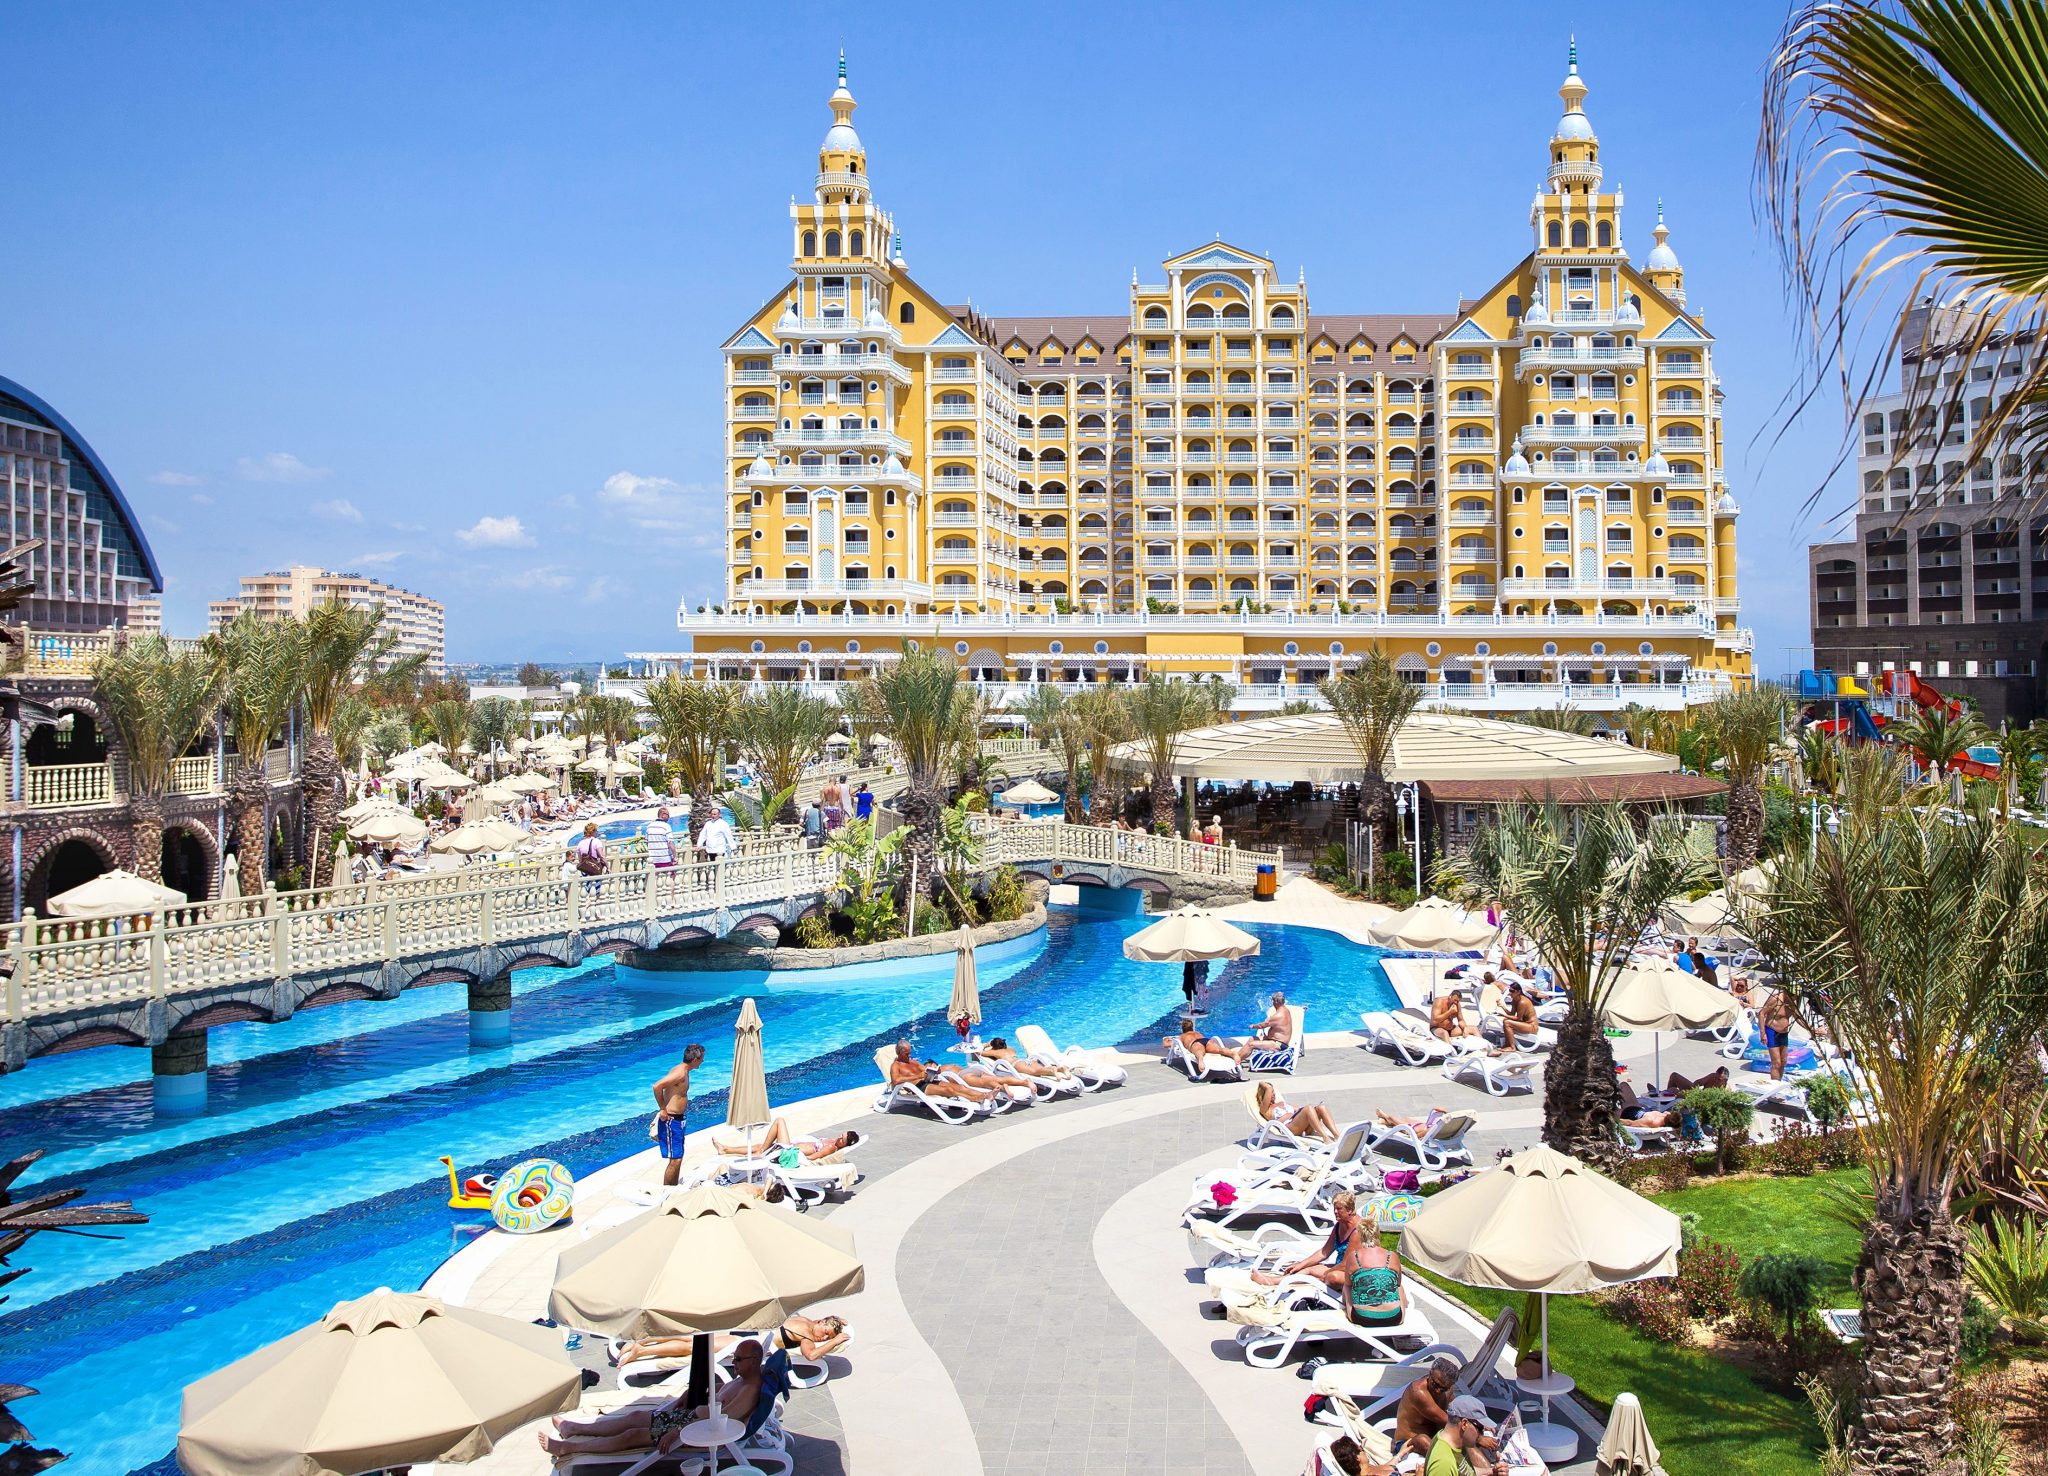 Letovanje_Turska_Hoteli_Avio_Antalija_Hotel_Royal_Holiday_Palace-1-scaled.jpg